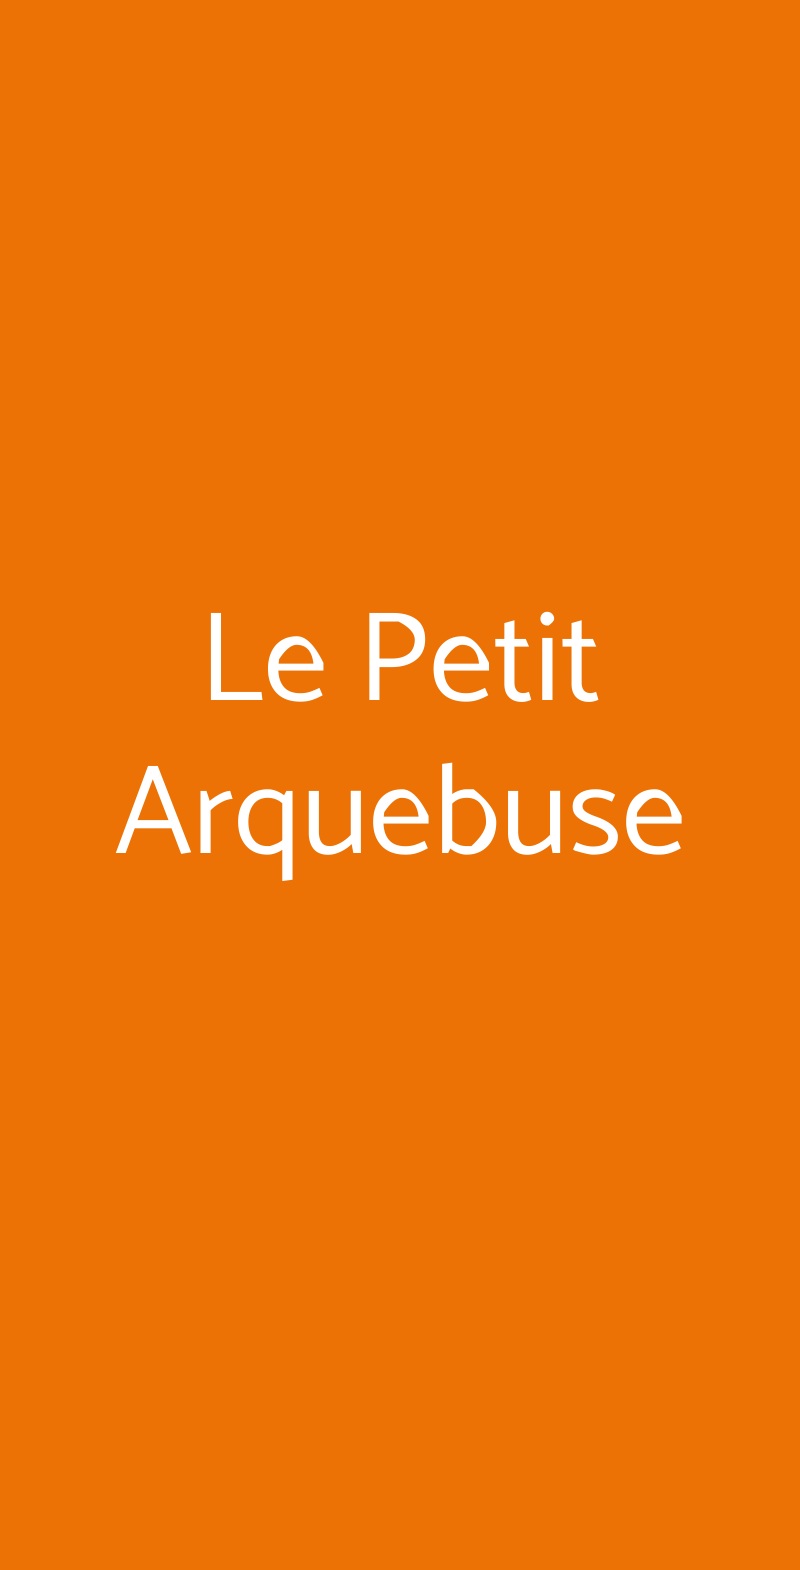 Le Petit Arquebuse Forli menù 1 pagina